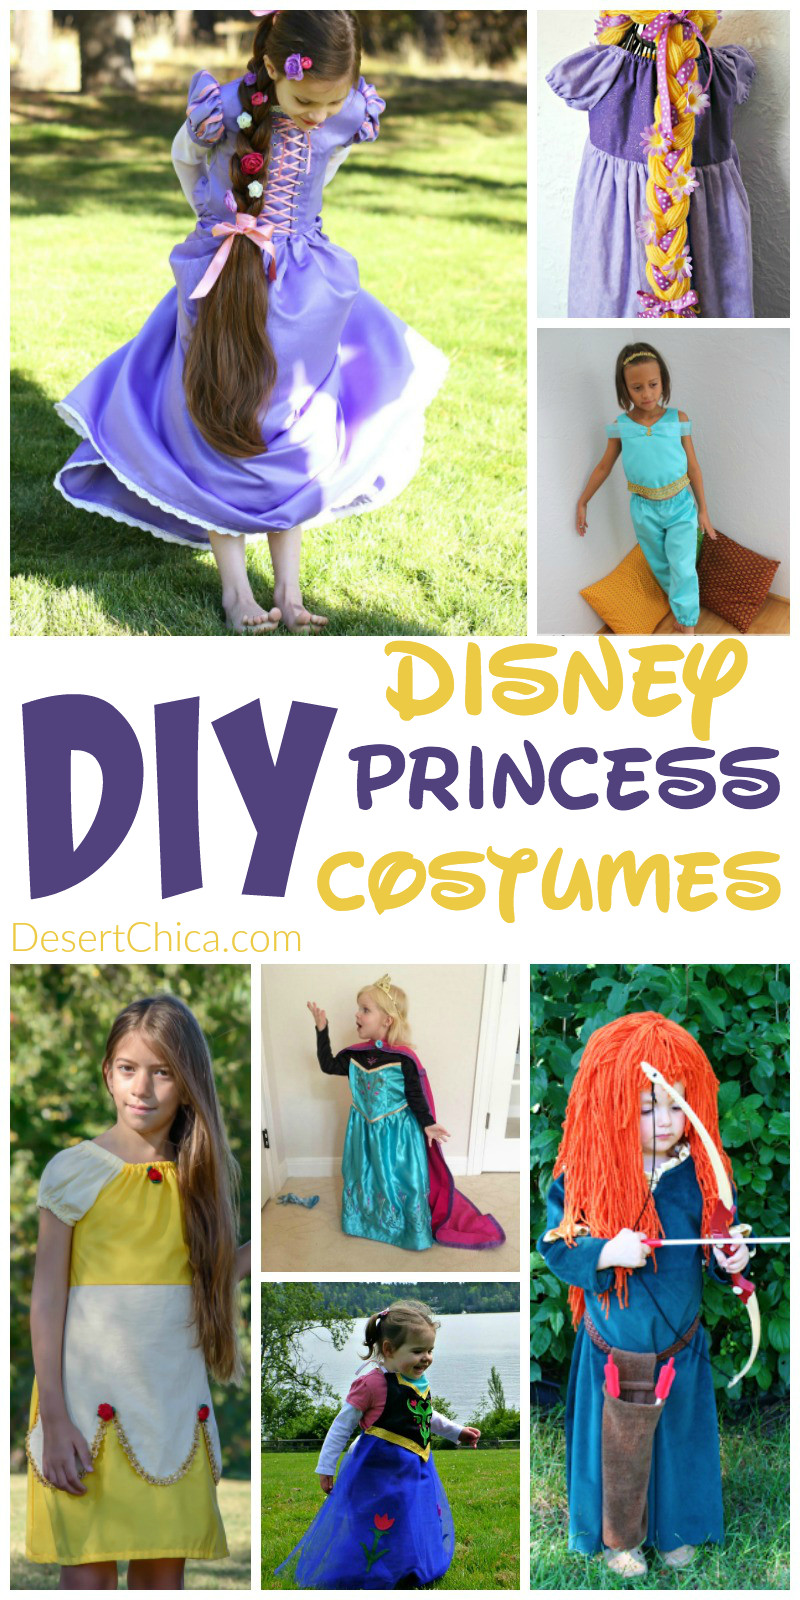 Best ideas about DIY Disney Princess Costumes
. Save or Pin DIY Disney Princess Costumes Now.